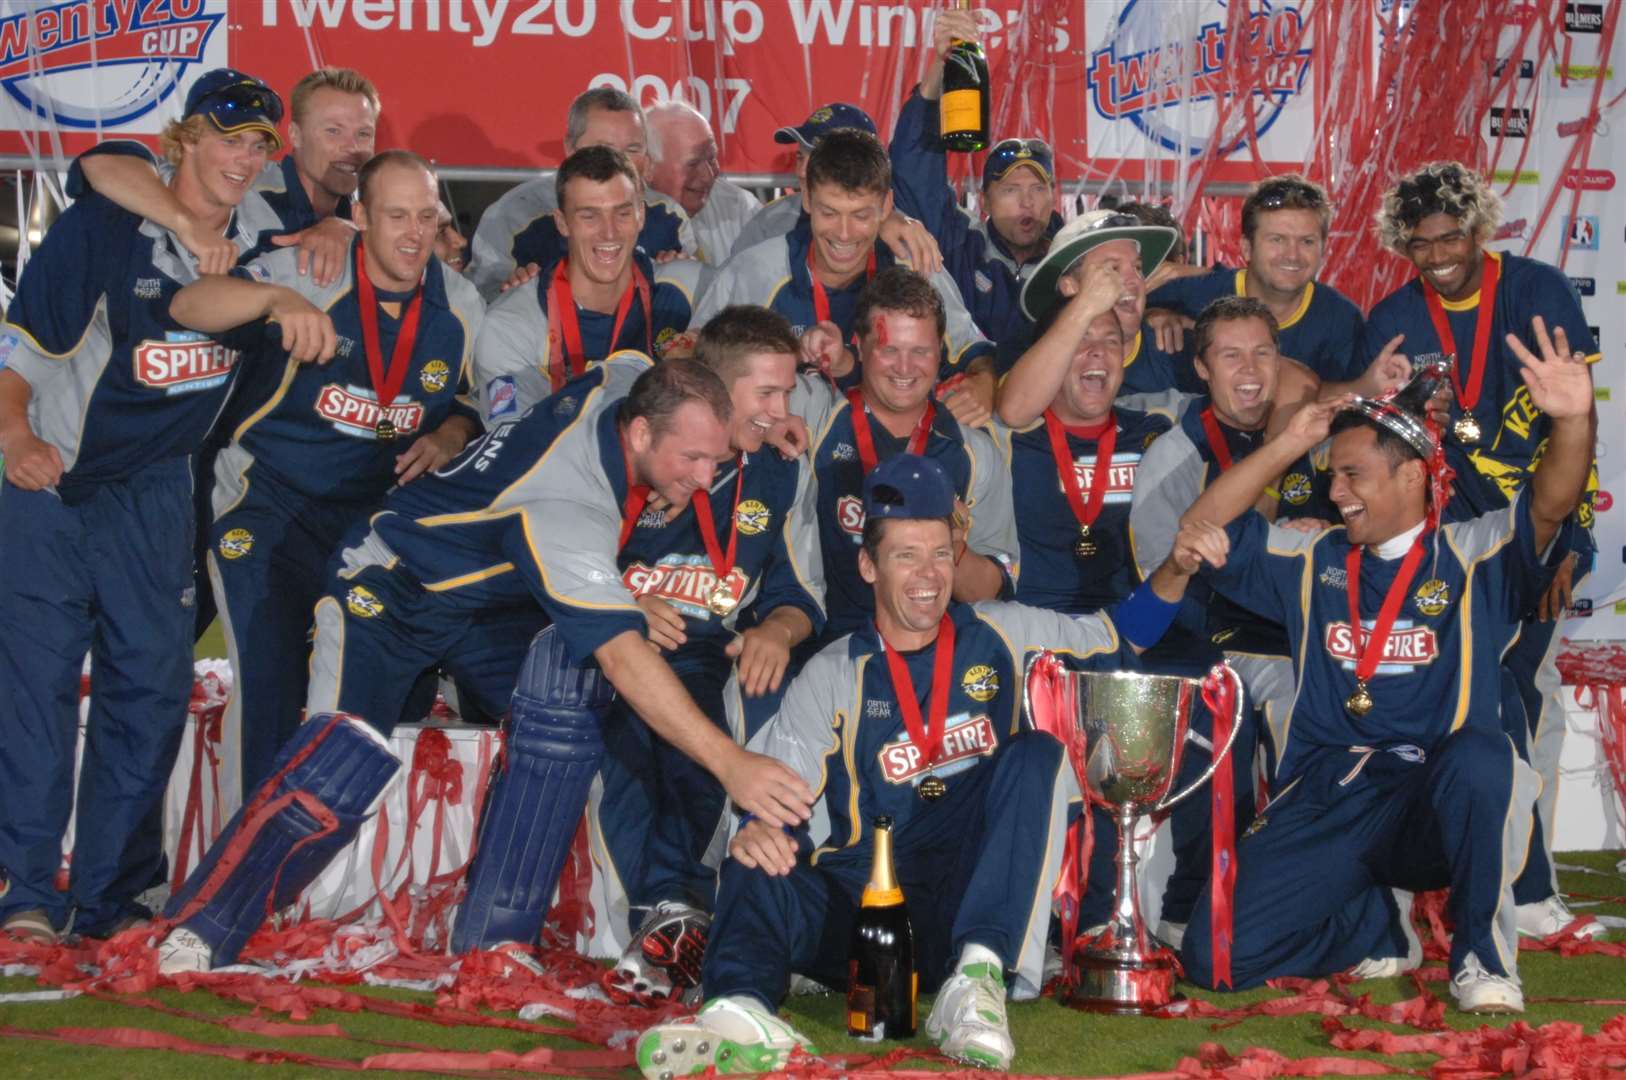 Kent celebrate T20 success in 2007. Photo: Barry Goodwin